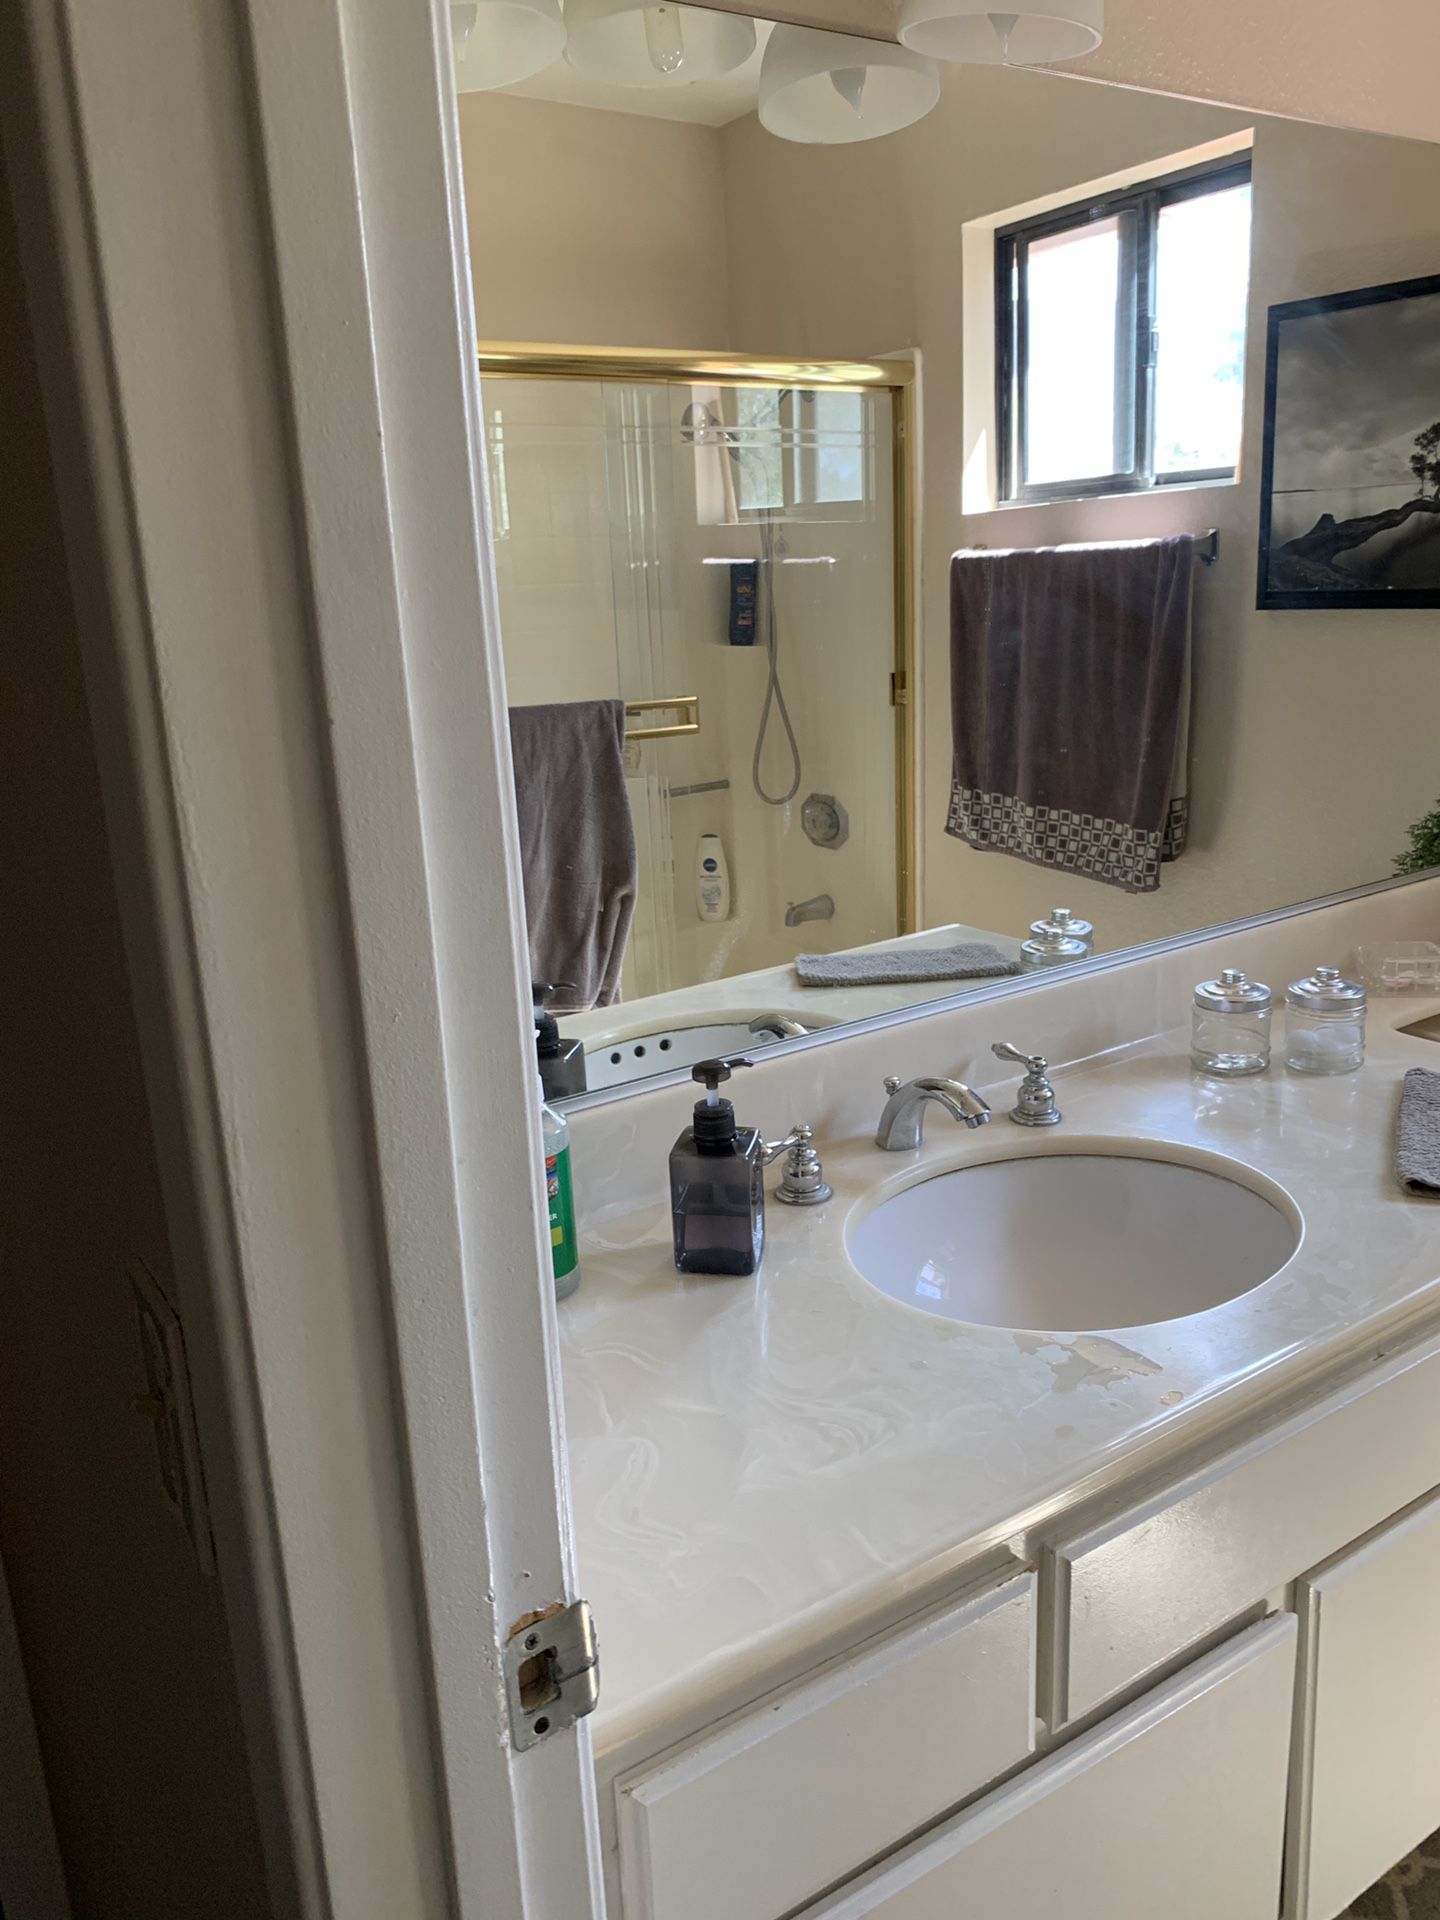 Bath room vanity, full mirror and medicine cabinet